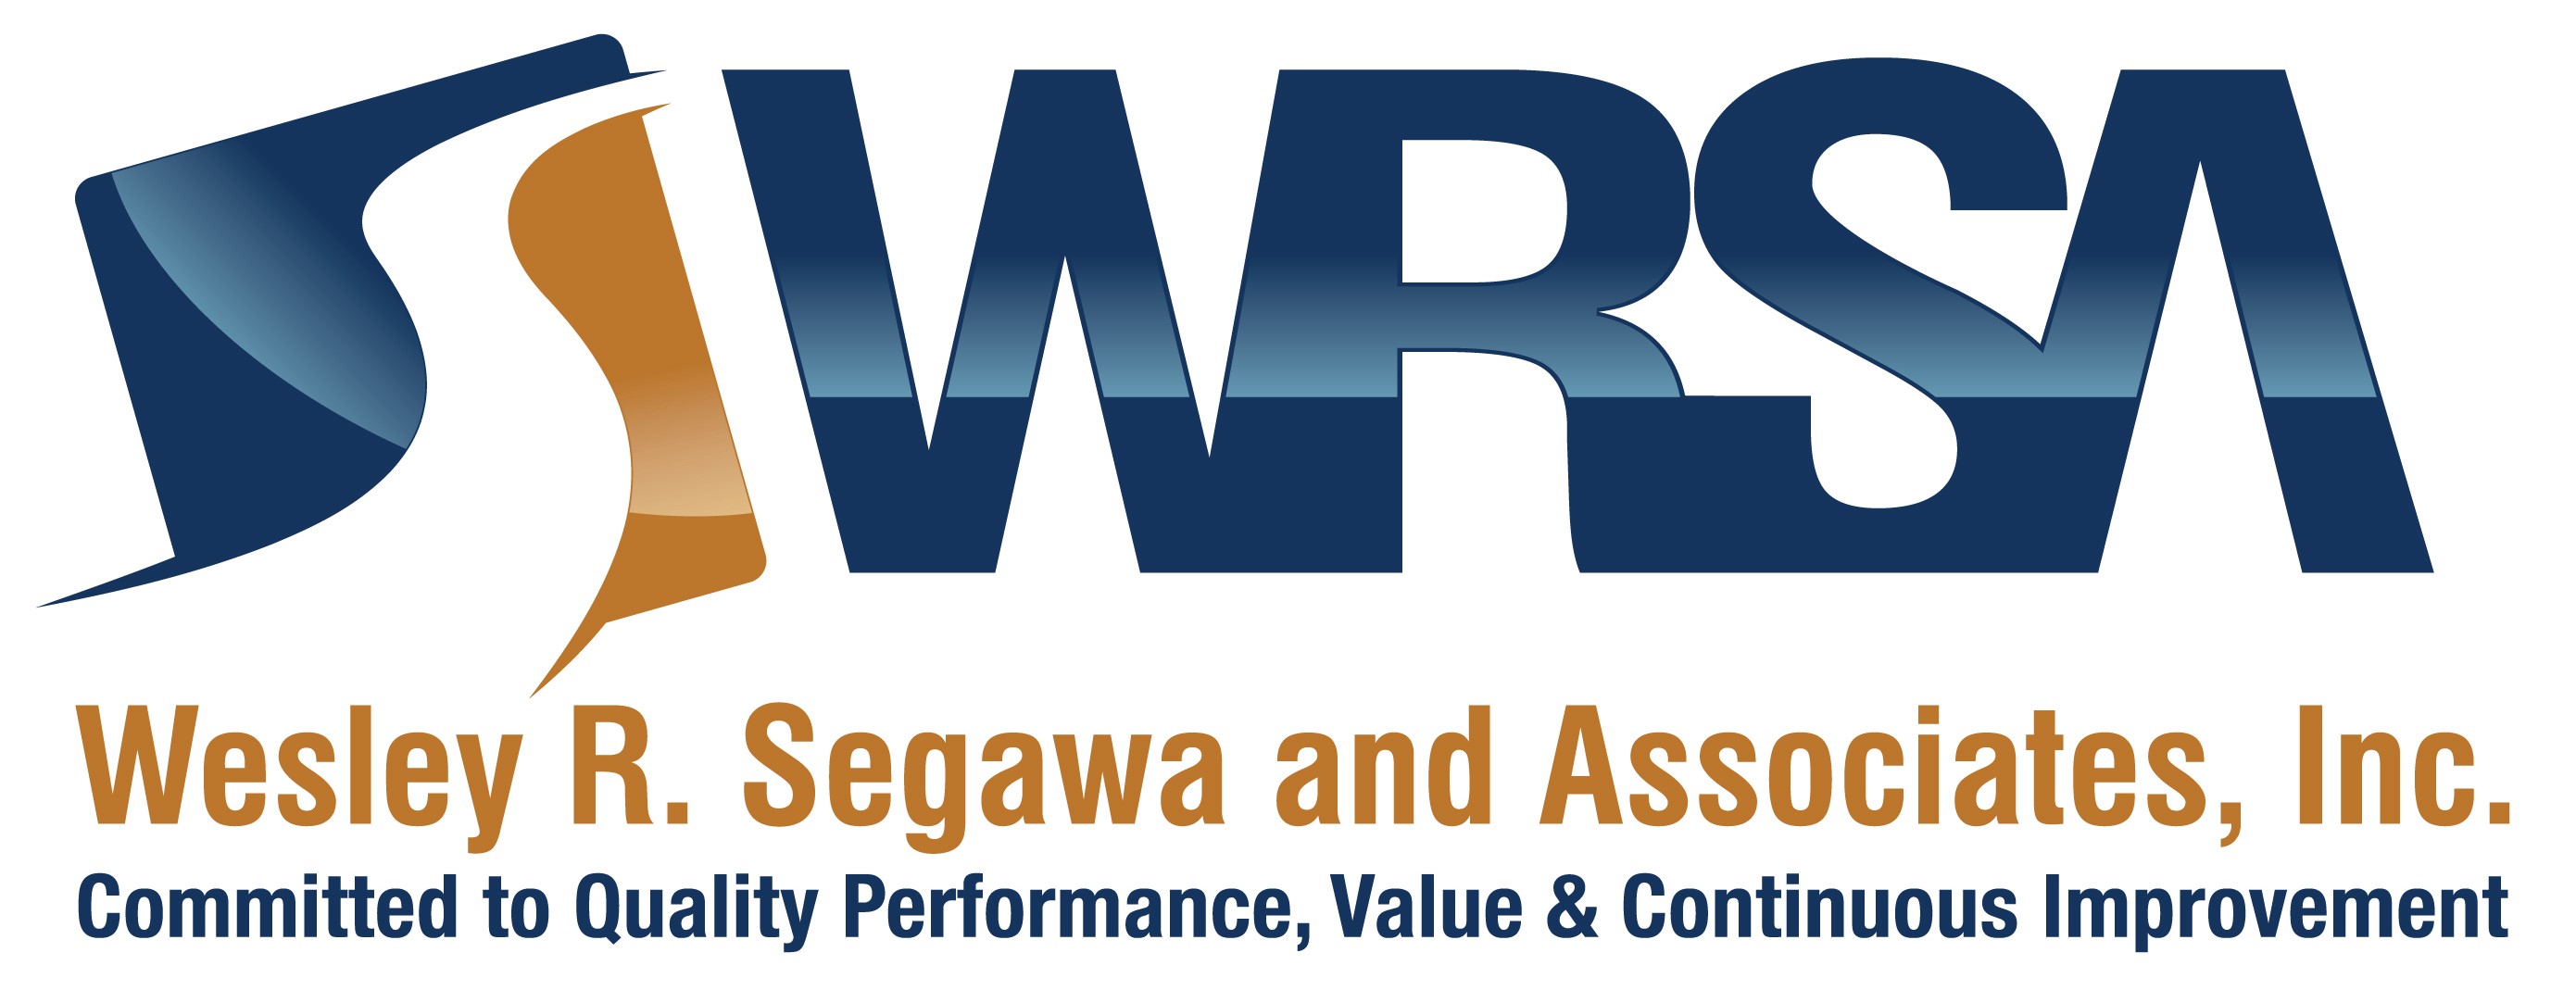 5. Wesley R. Segawa and Associates (Tier 4)